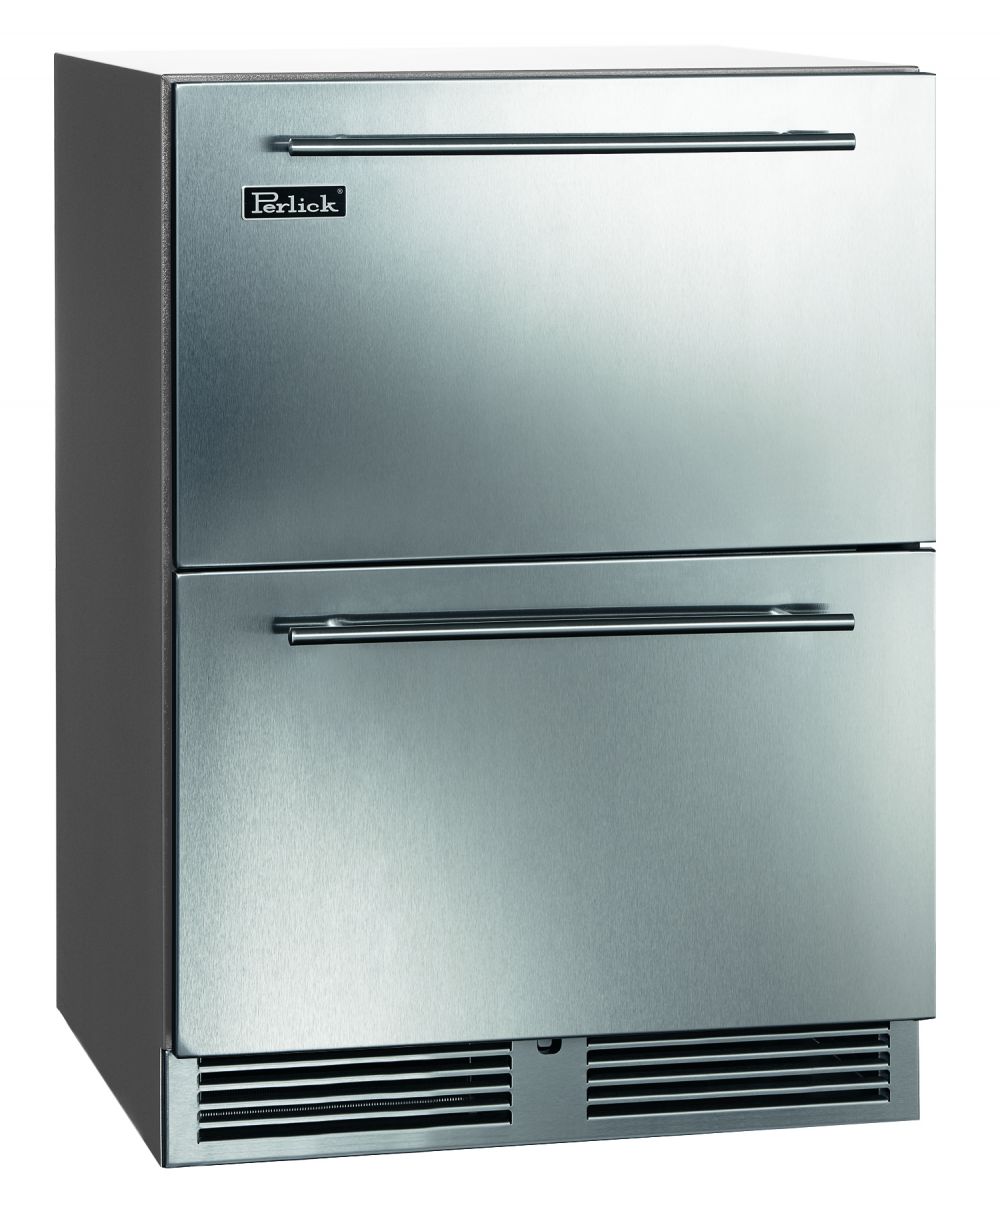 Perlick HC24RO46 24" Outdoor Refrigerator Drawers